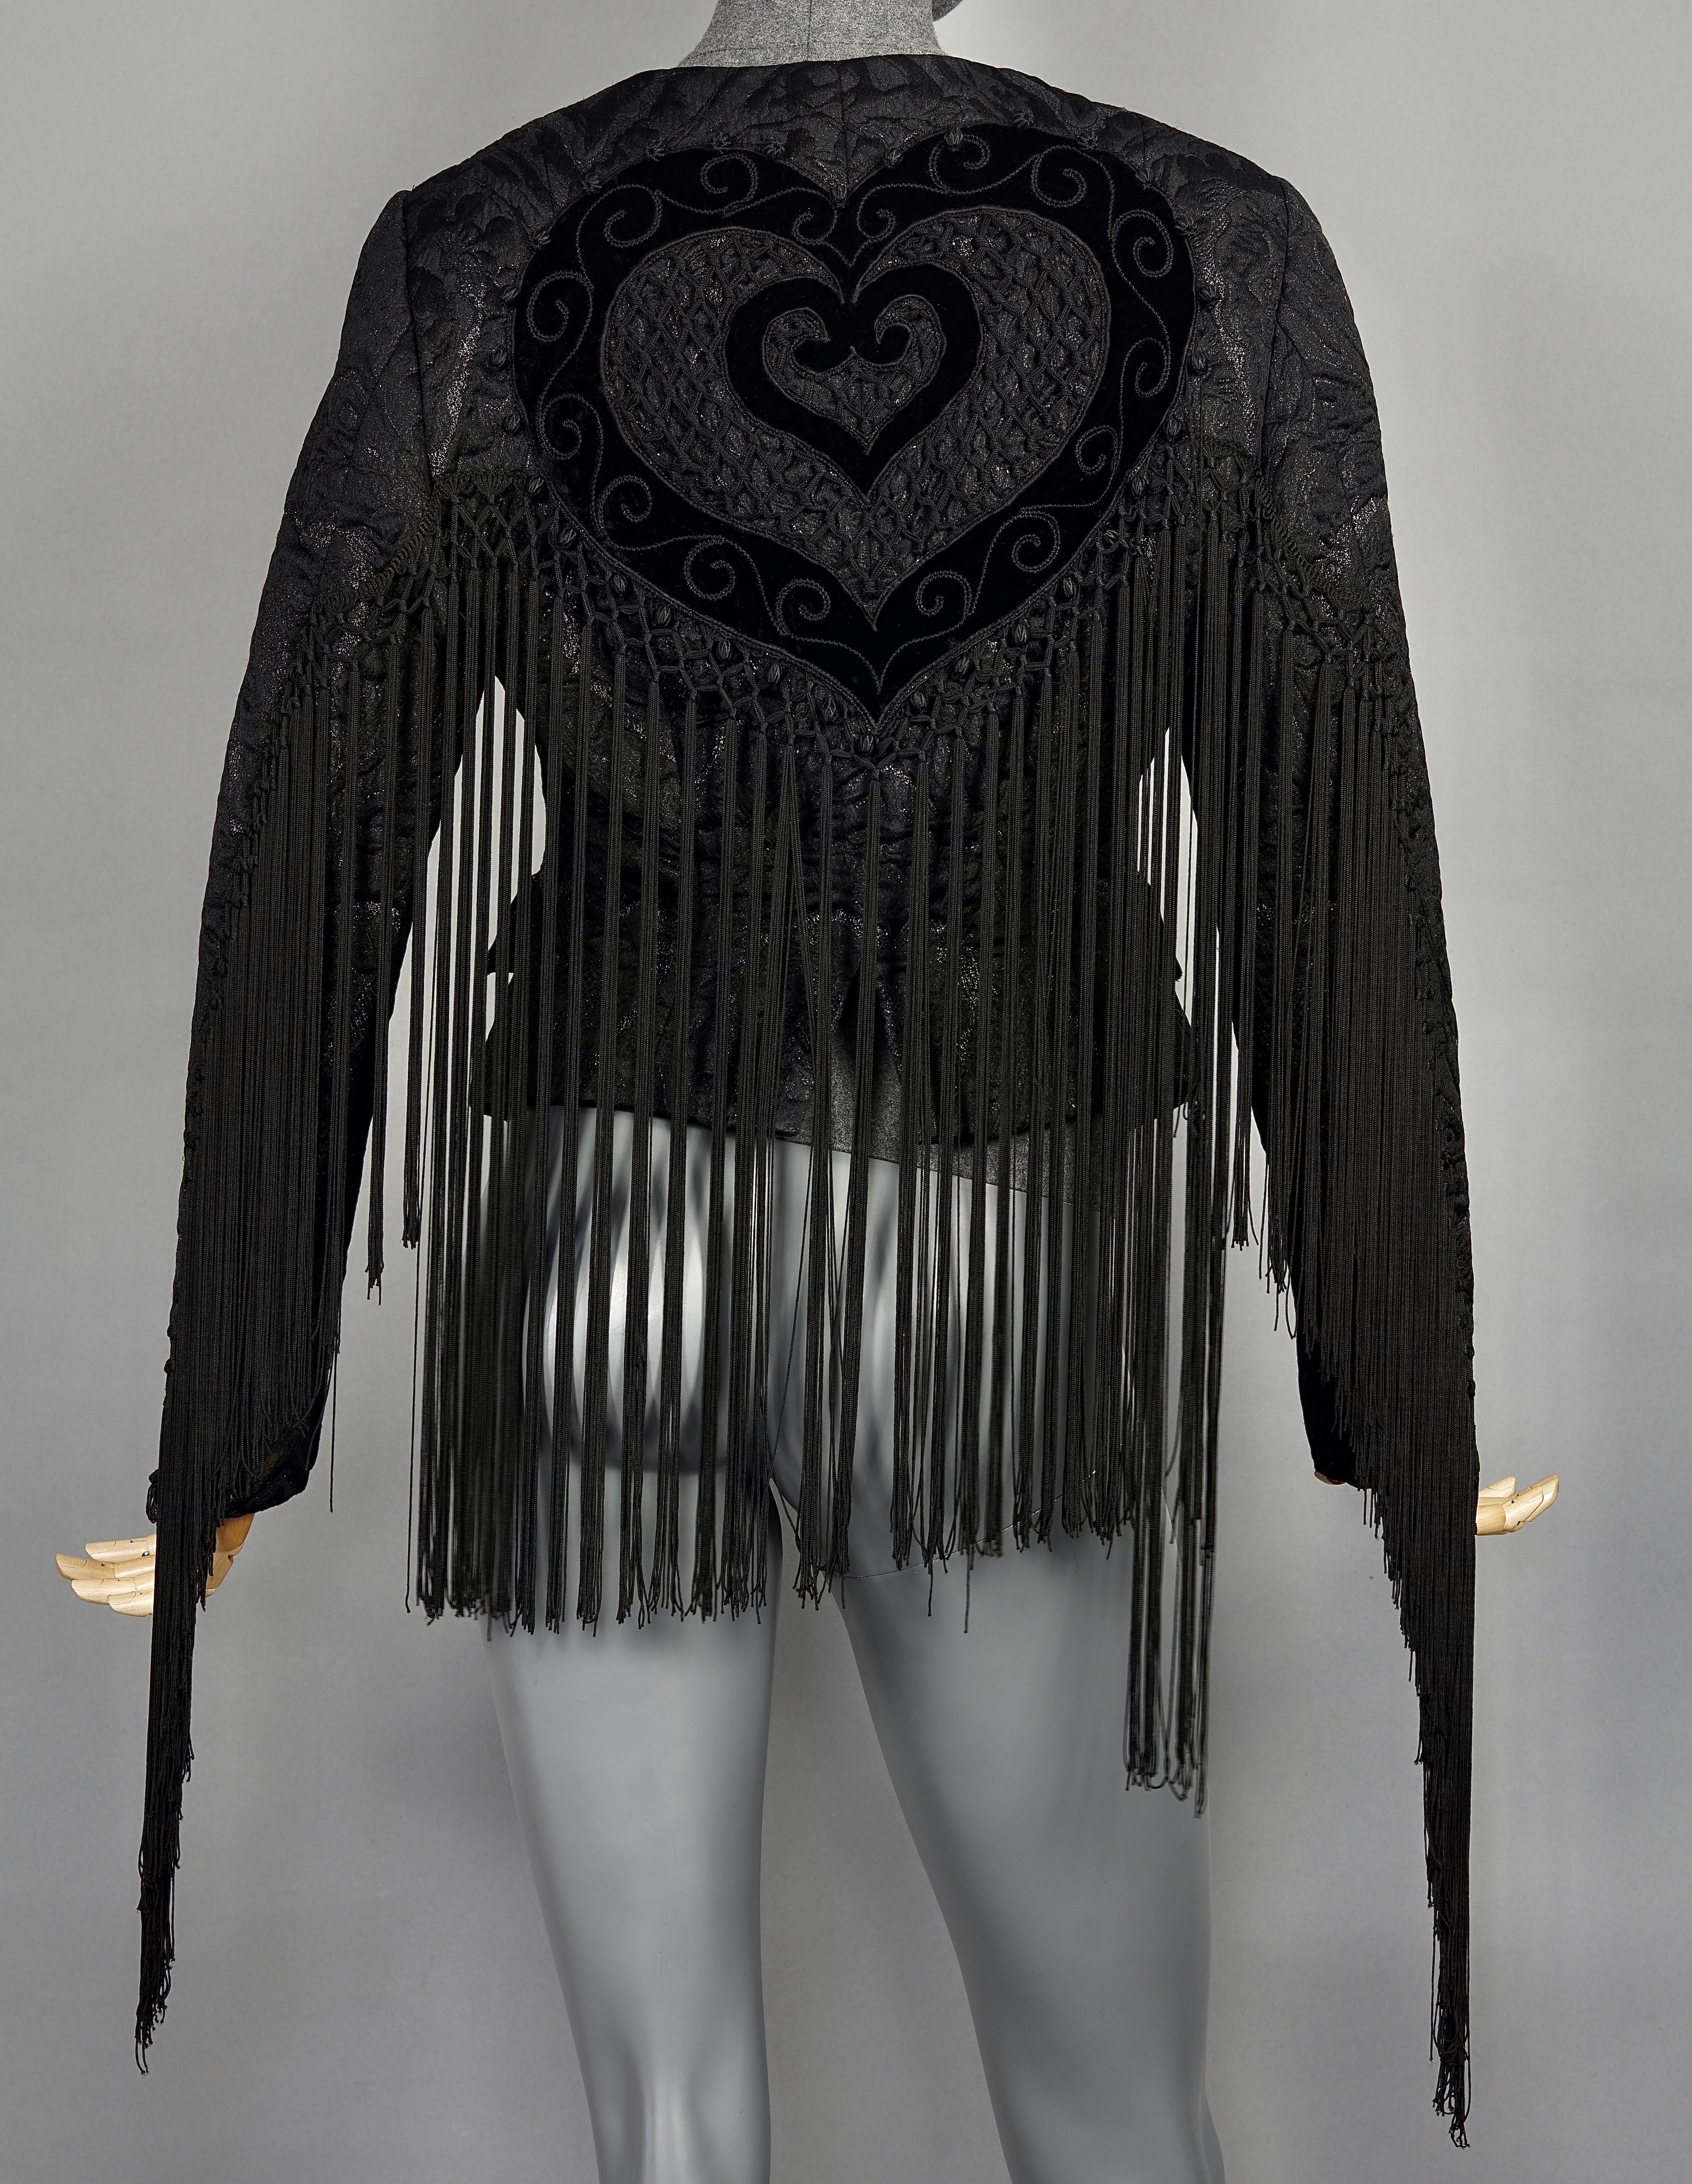 Vintage Rare CHRISTIAN LACROIX Matador Fringe Macrame Damask Metallic Jacket Skirt Suit

Measurements taken laid flat, please double bust, waist and hips:
JACKET
Shoulder: 17.12 inches (43.5 cm)
Sleeves: 24 inches (61 cm)
Bust: 18.70 inches (47.5